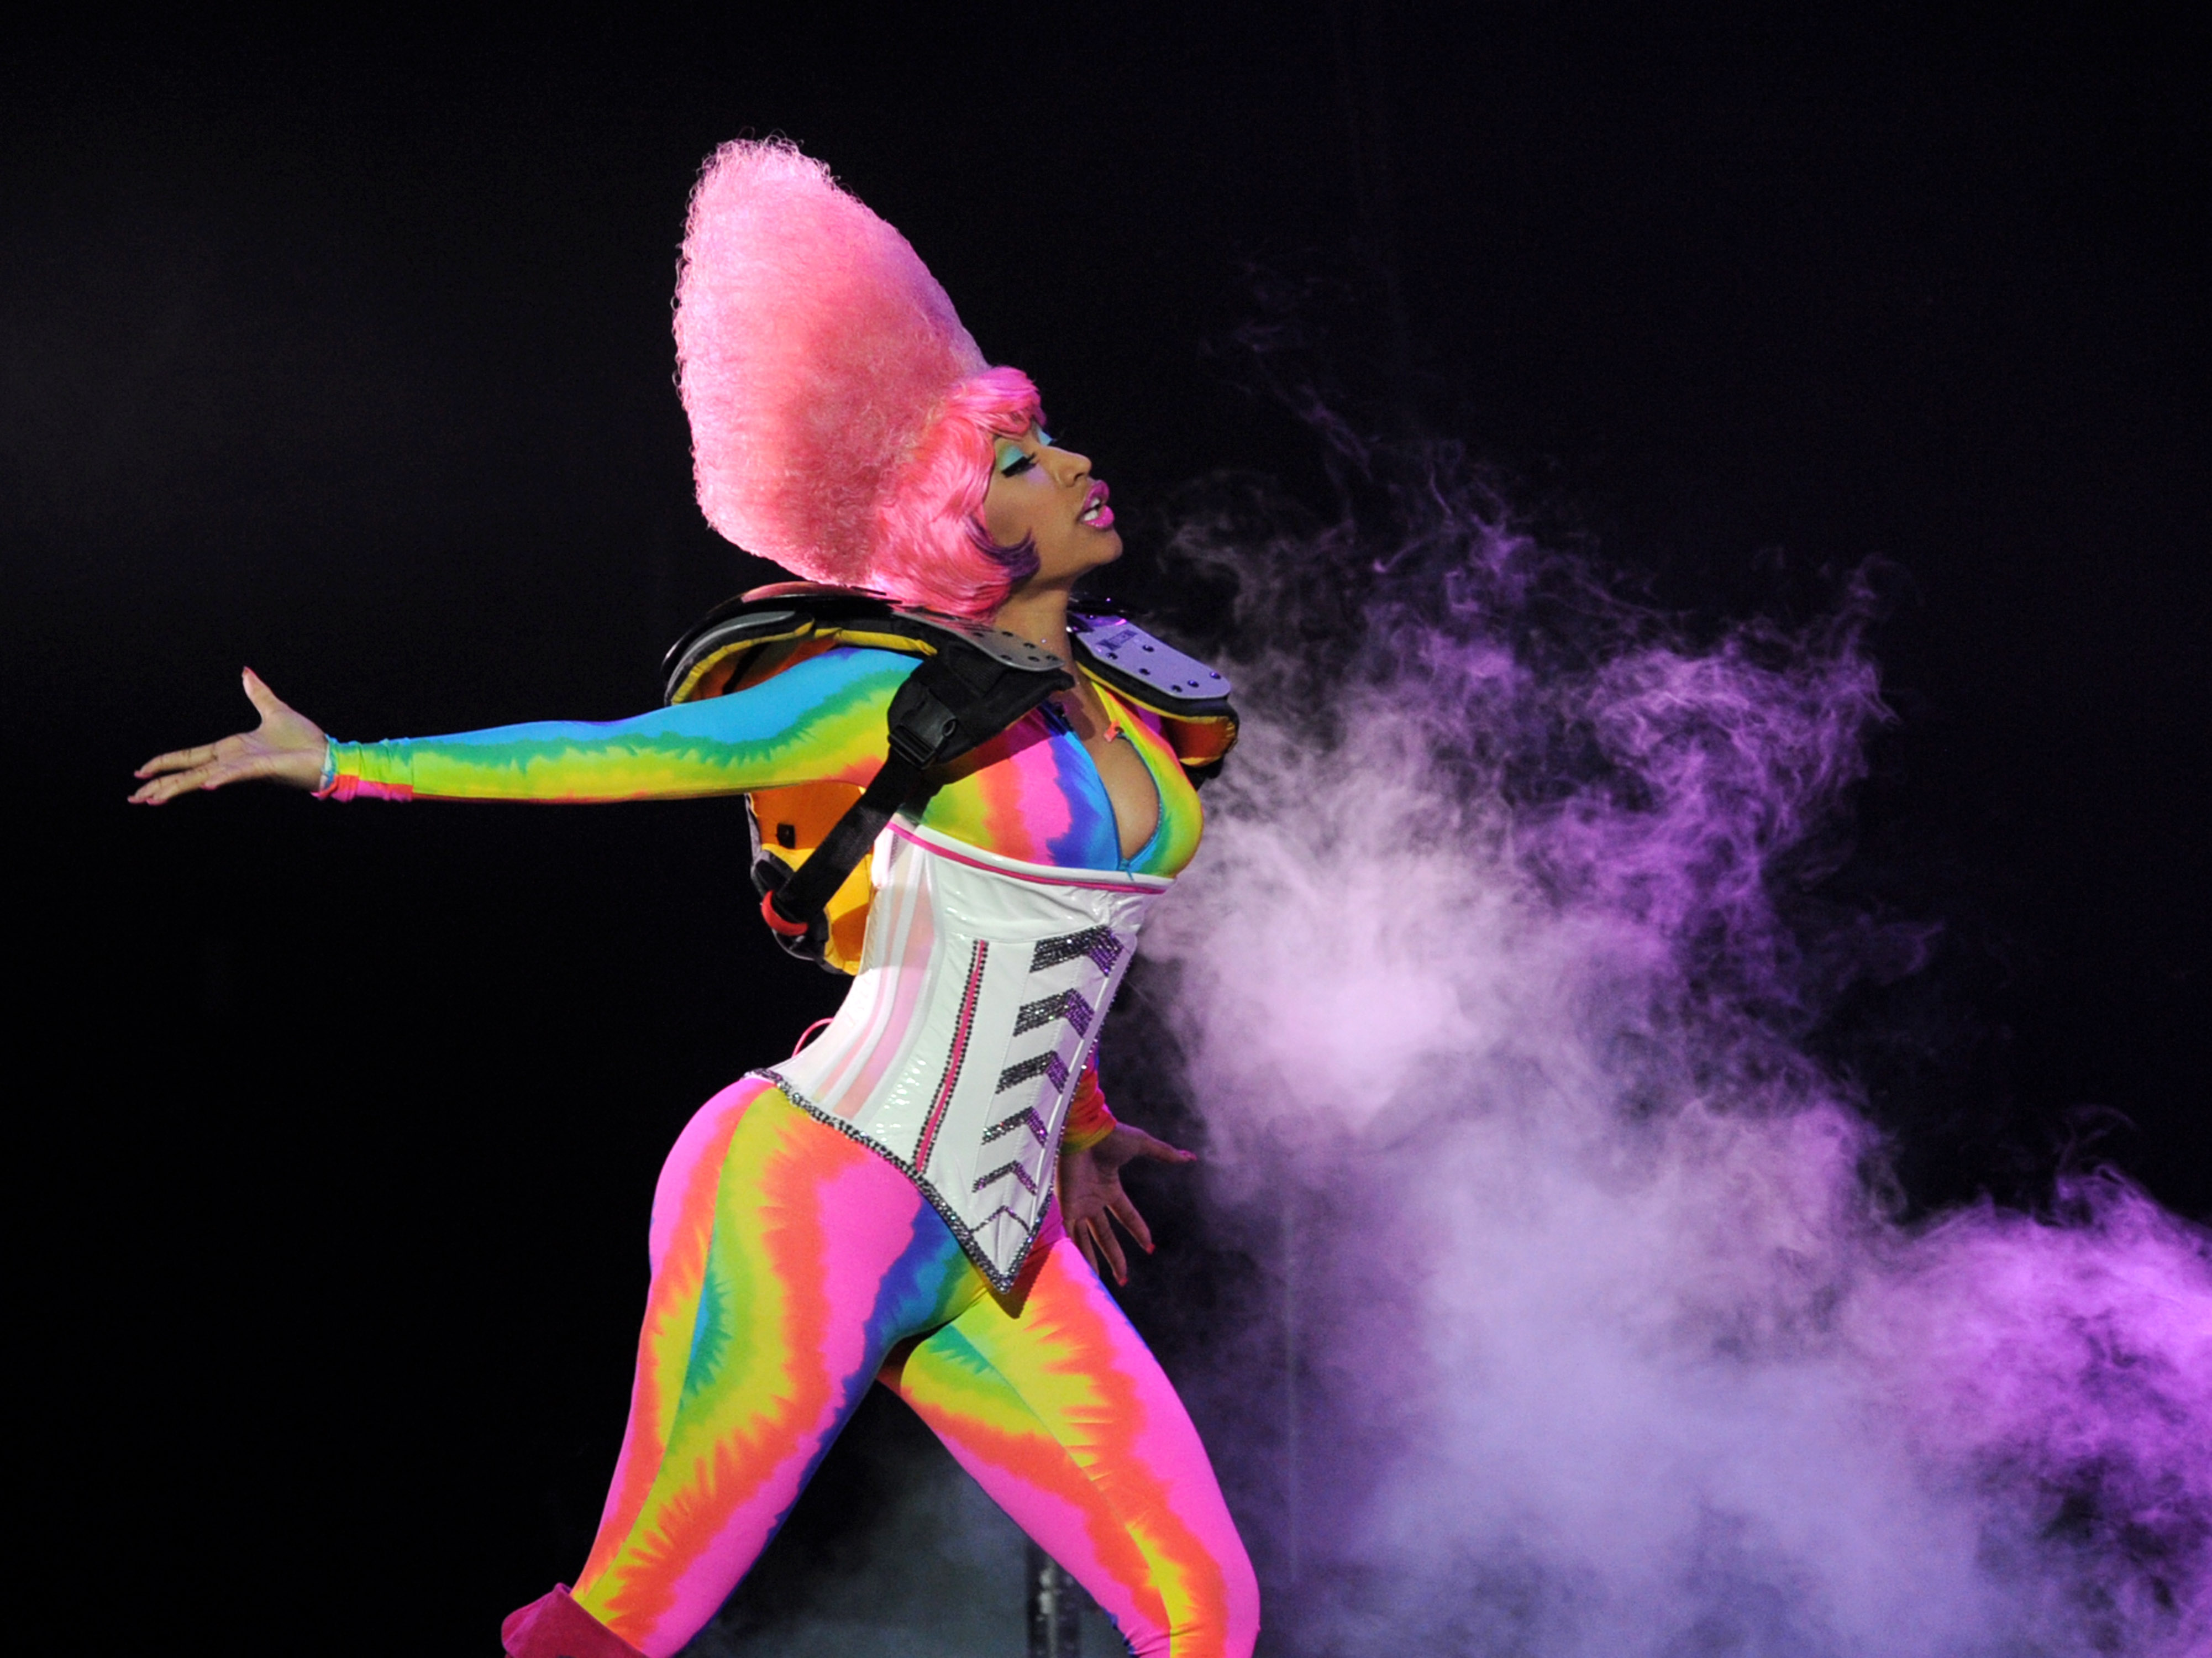 Rapper Nicki Minaj performs at the Staples Center on April 22, 2011 in Los Angeles, California.